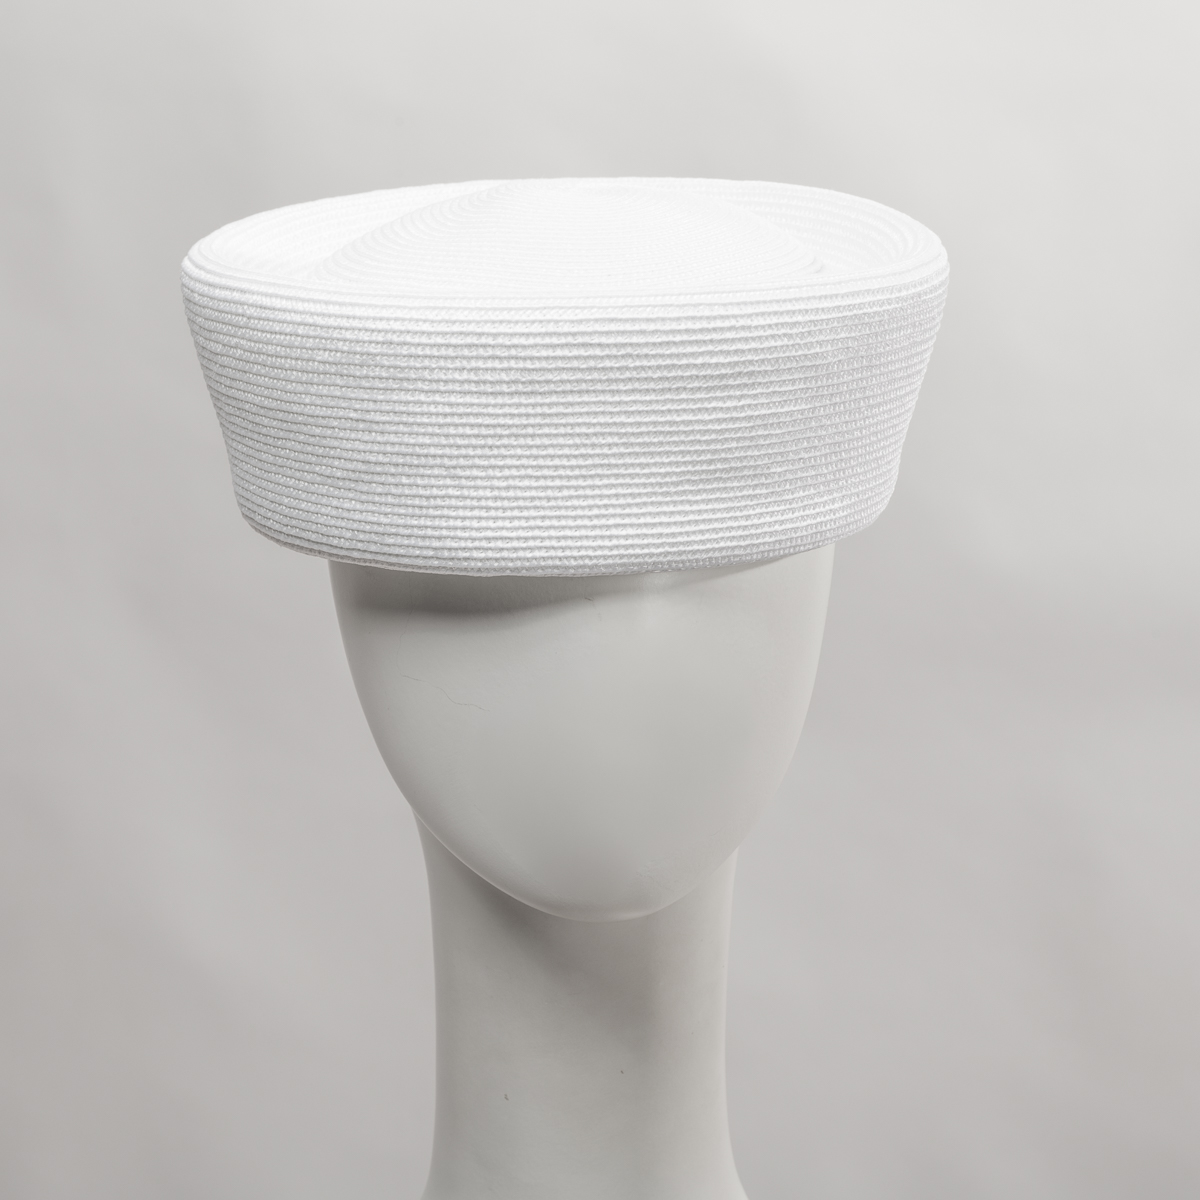 Hat Box Cream White by Lierys -->